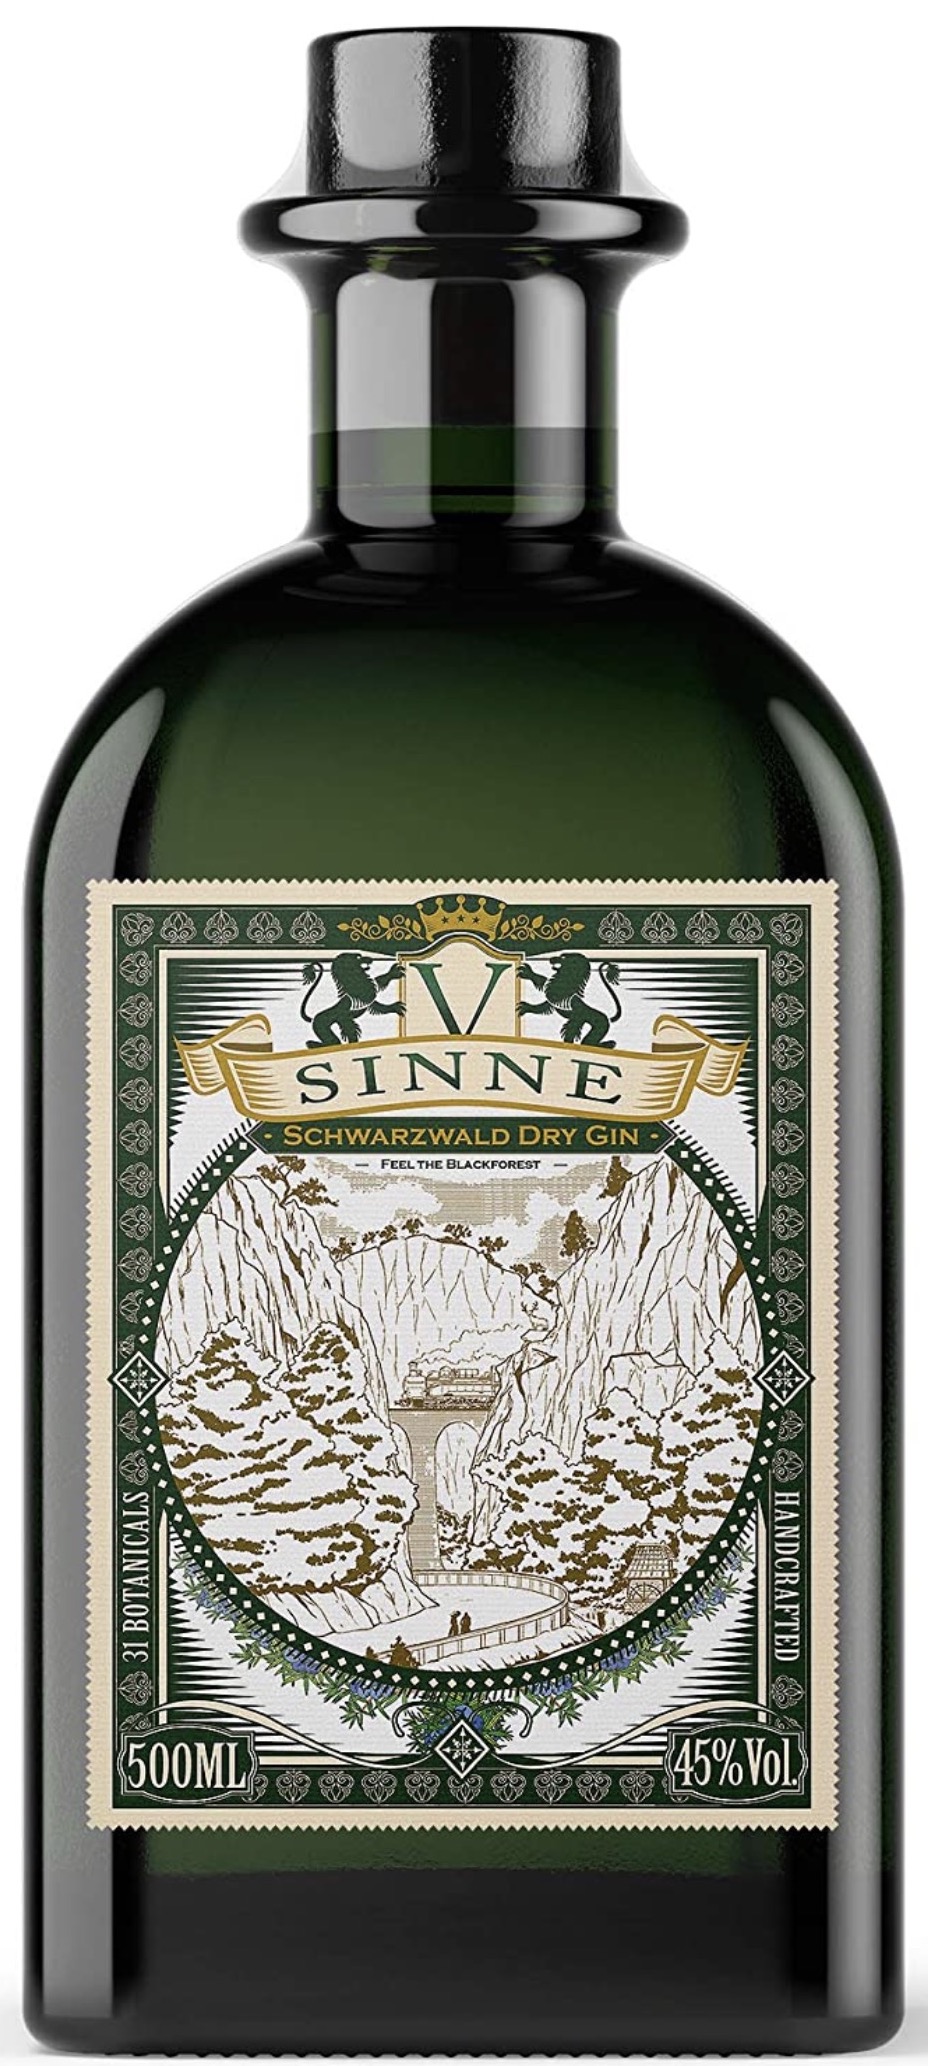 V-SINNE Schwarzwald Dry Gin 45% vol. 0,5L